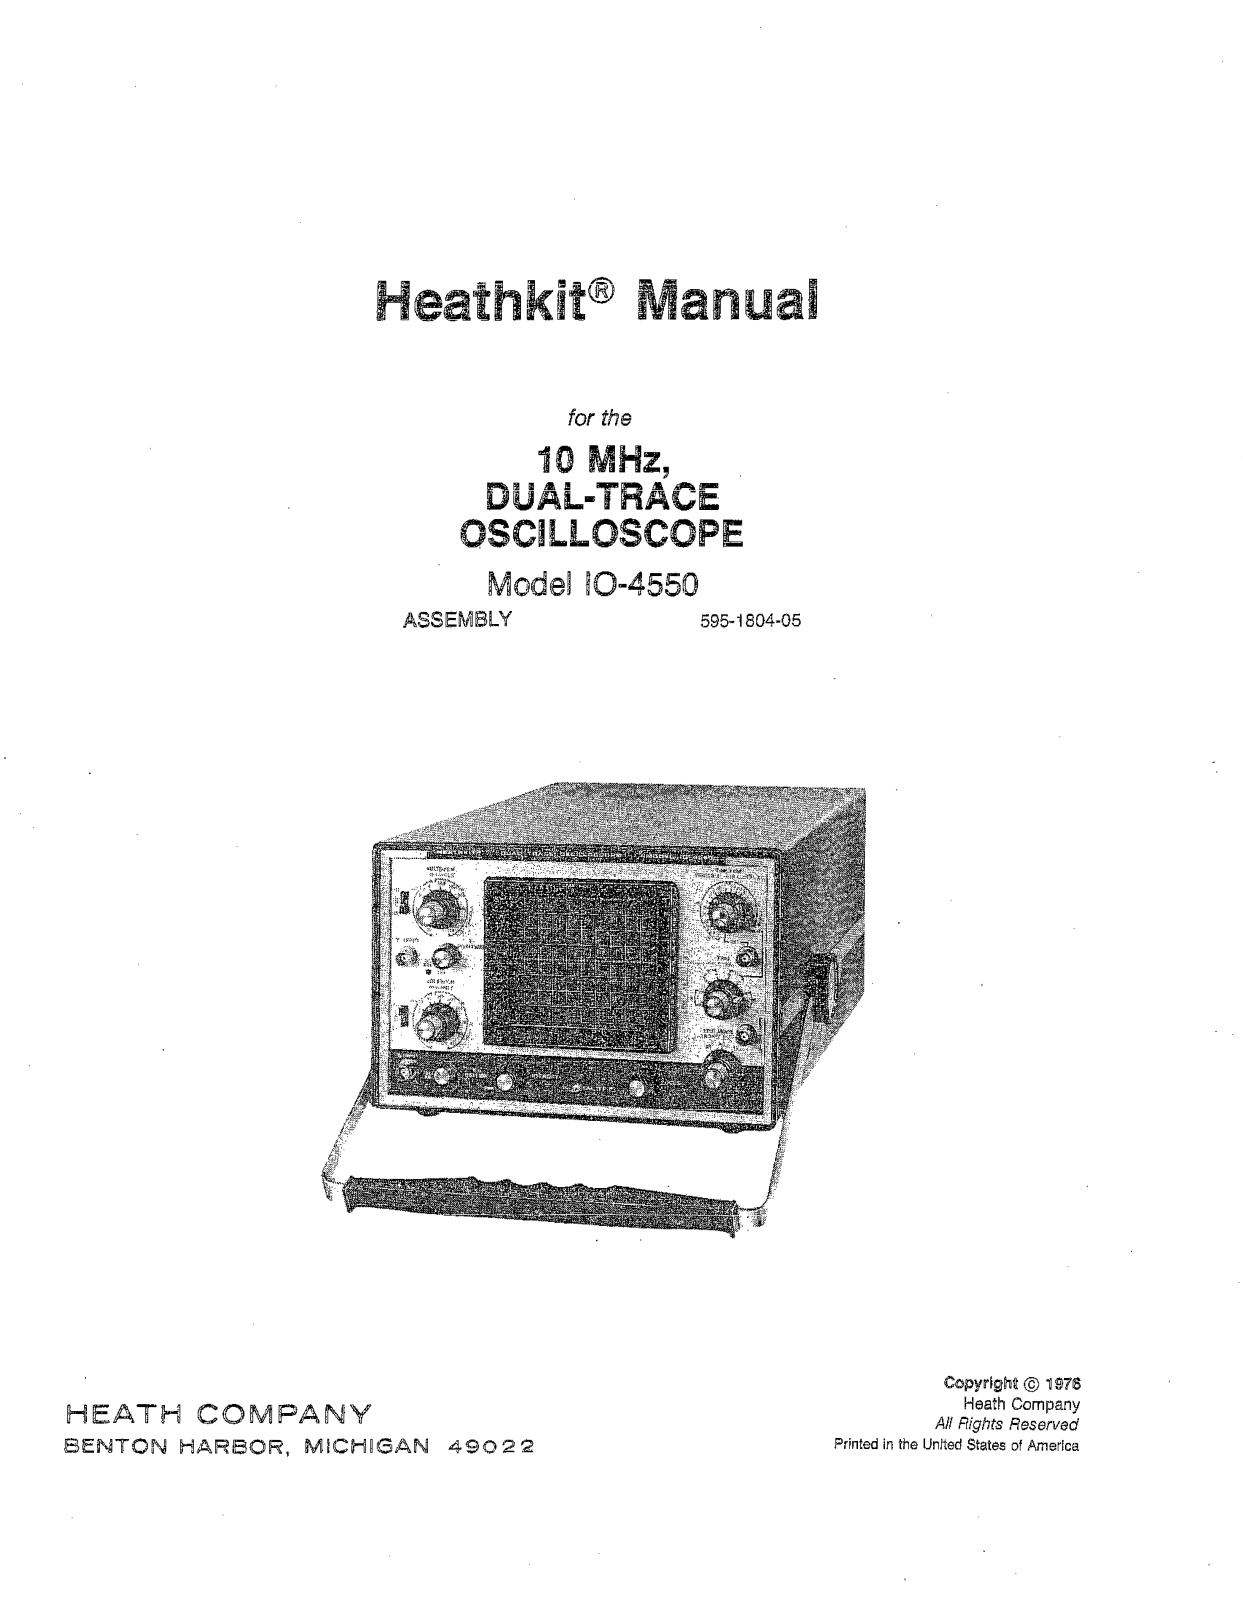 Heathkit IO-4550 User Manual